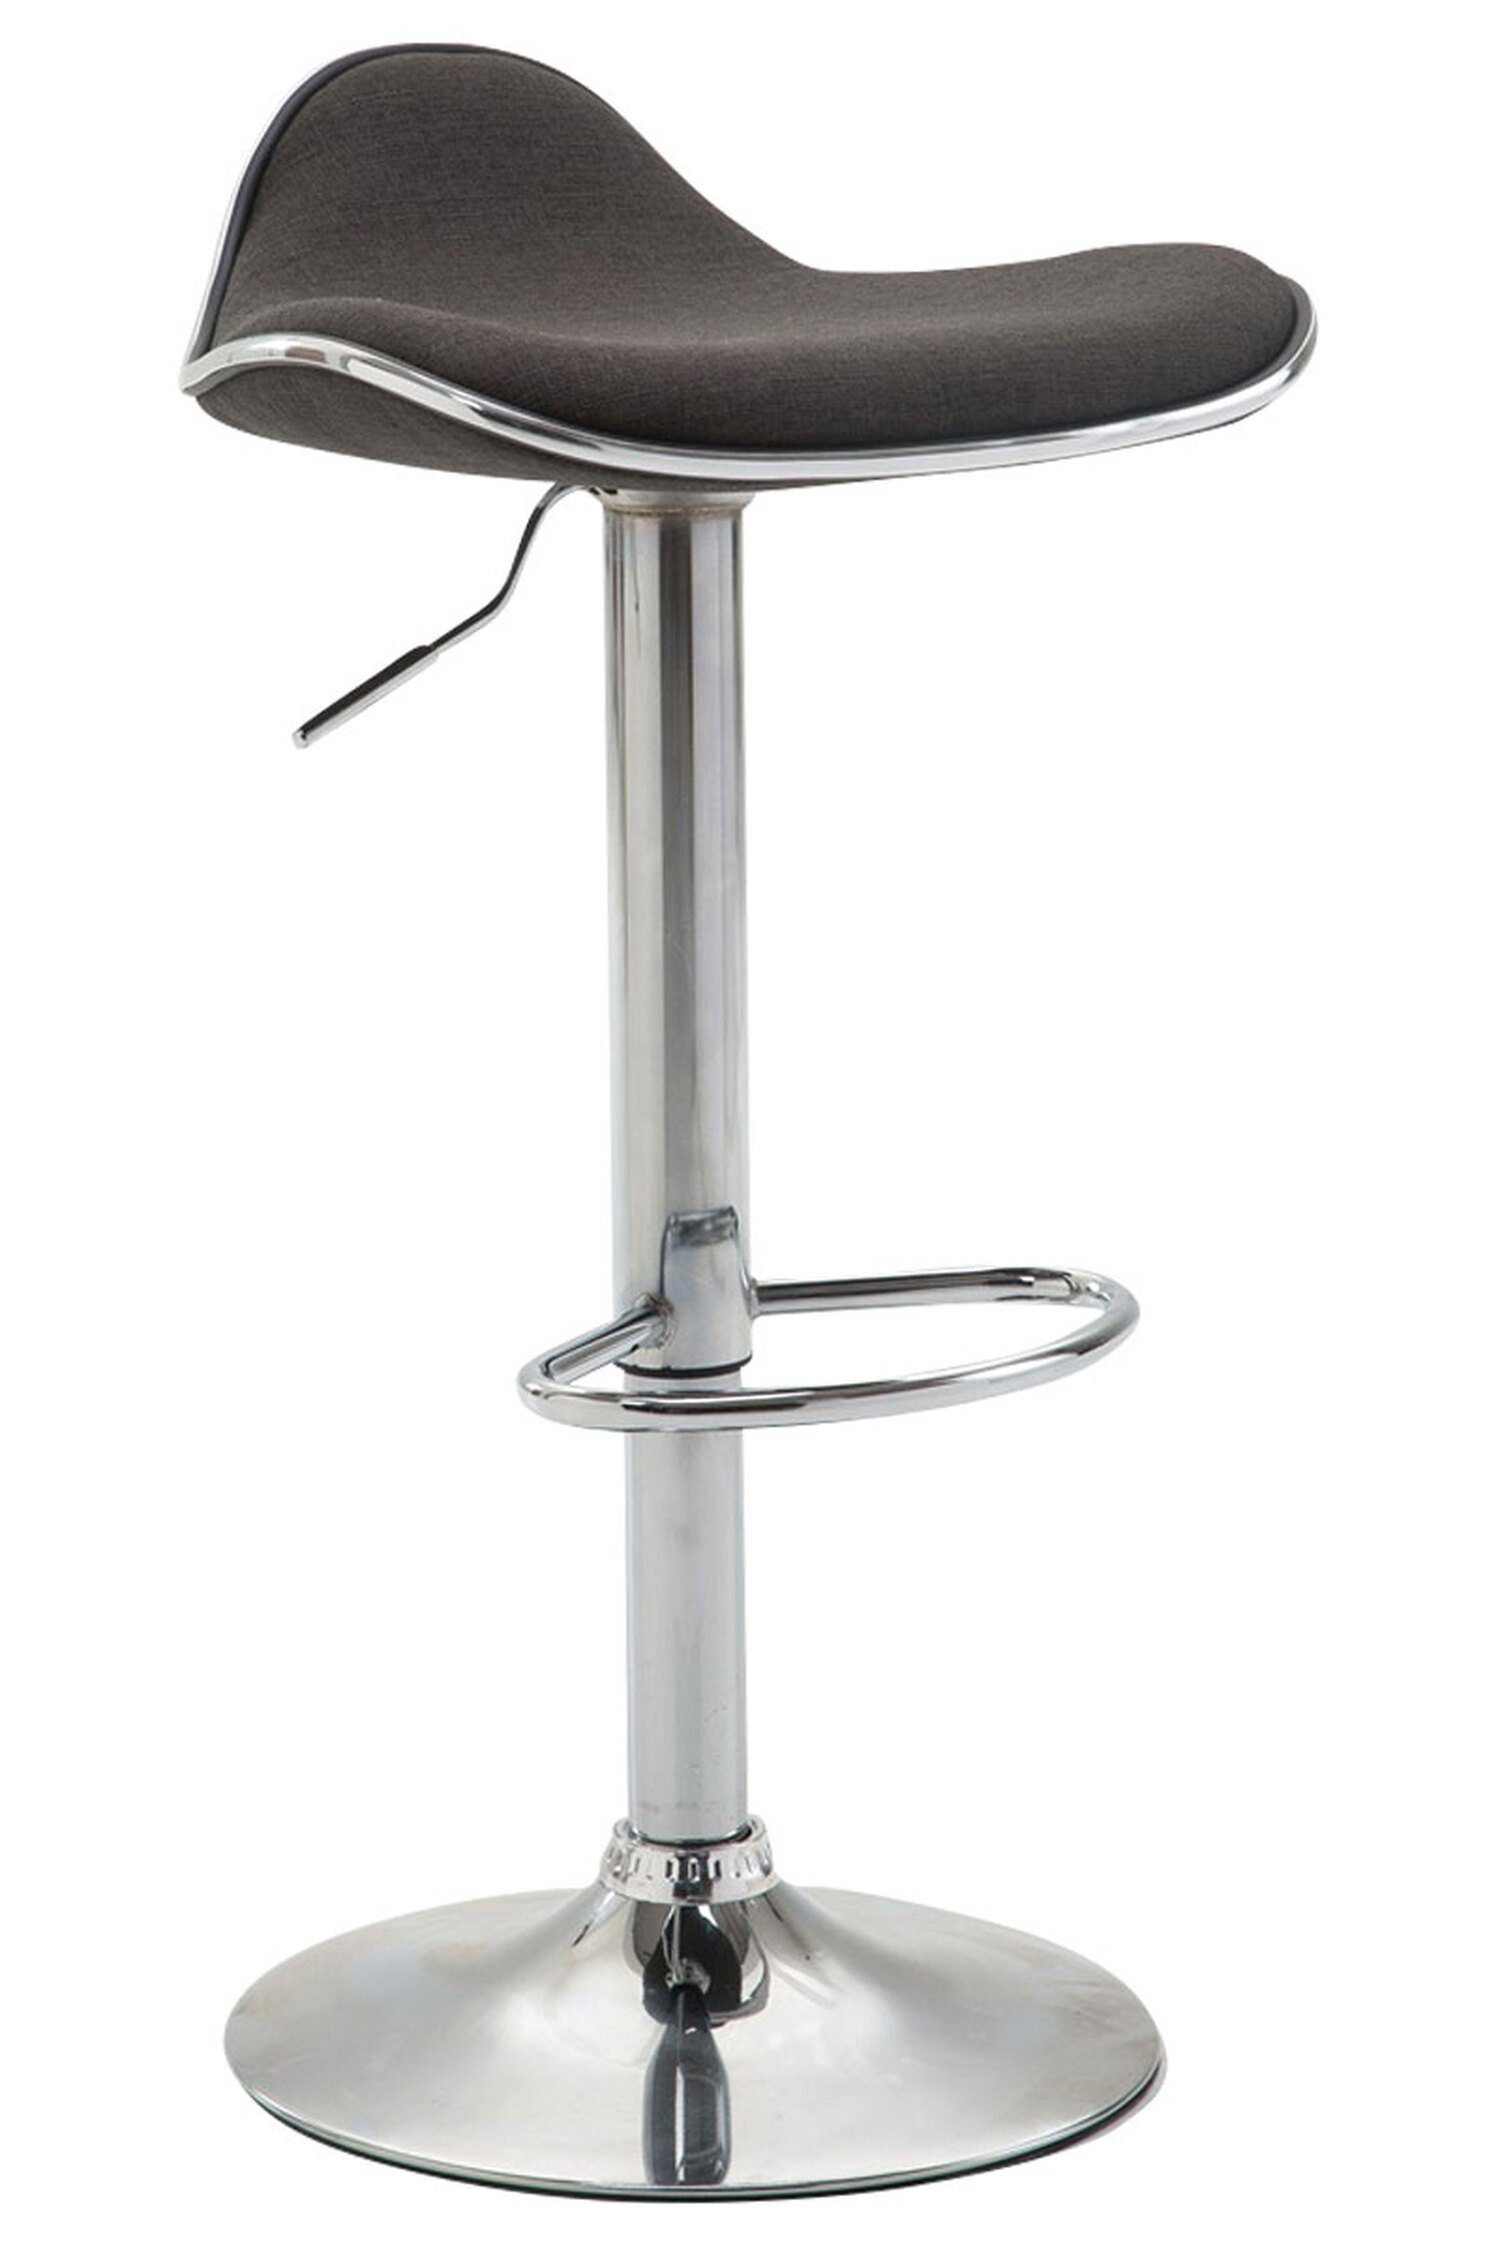 360° Dunkelgrau Shangrila Sitzfläche: Stoff drehbar Tresenhocker), & - - TPFLiving Stahl (Barstuhl höhenverstellbar - - Küche Barhocker für Hocker Theke chromfarbener